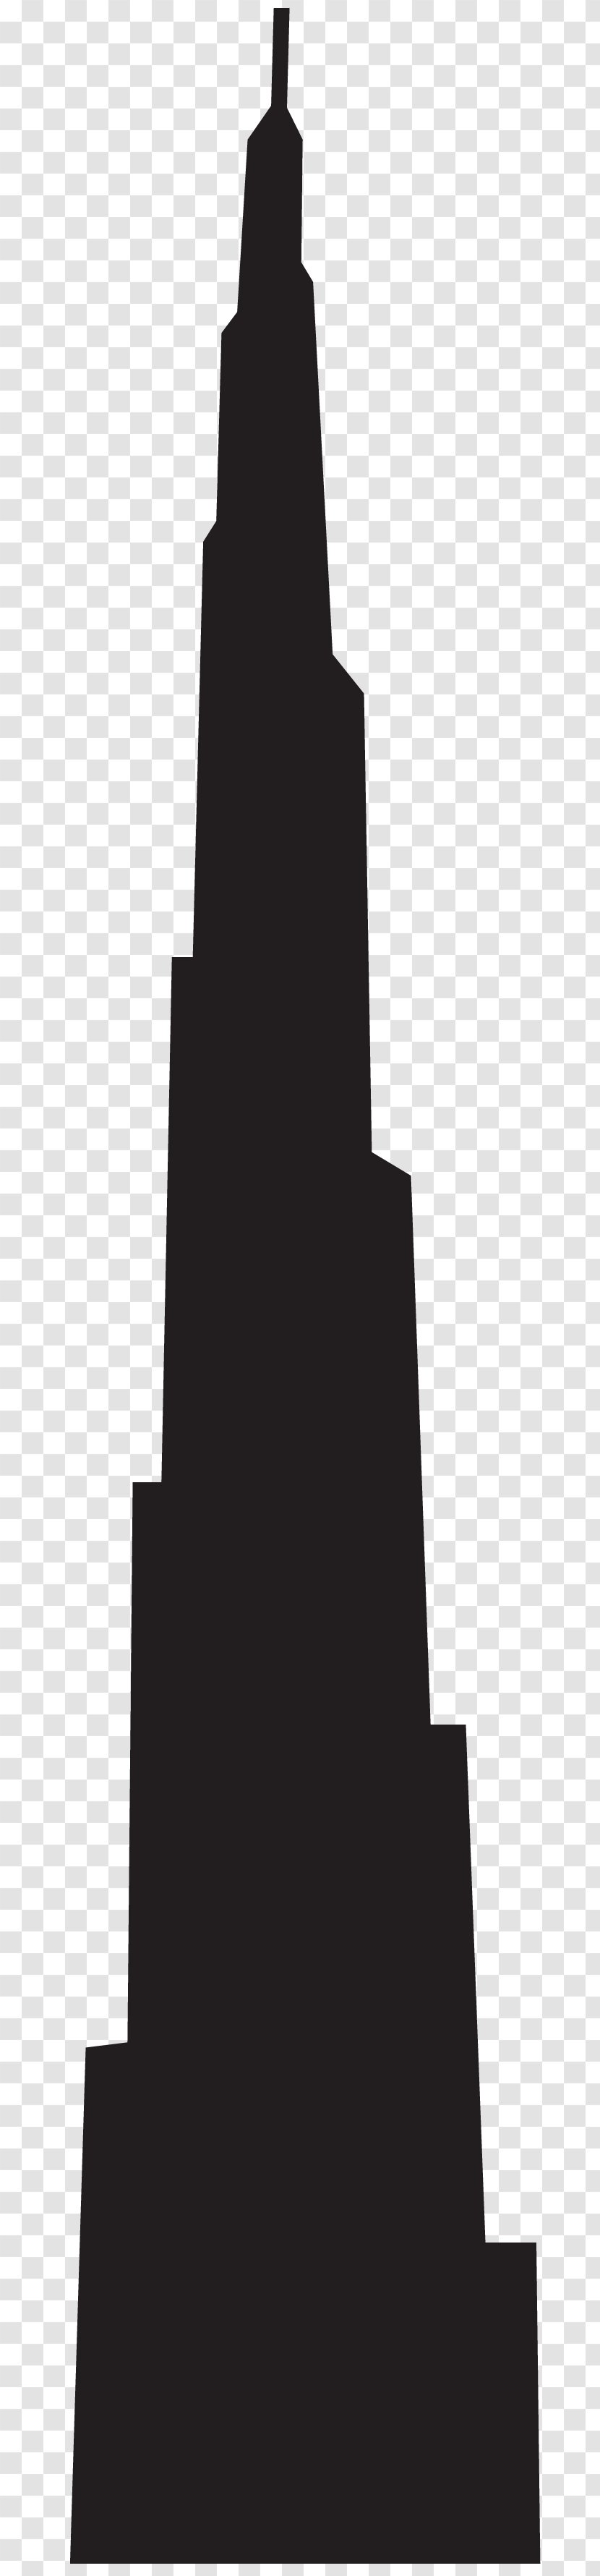 Globe Flight Silhouette Clip Art - Email - Burj Khalifa Transparent PNG